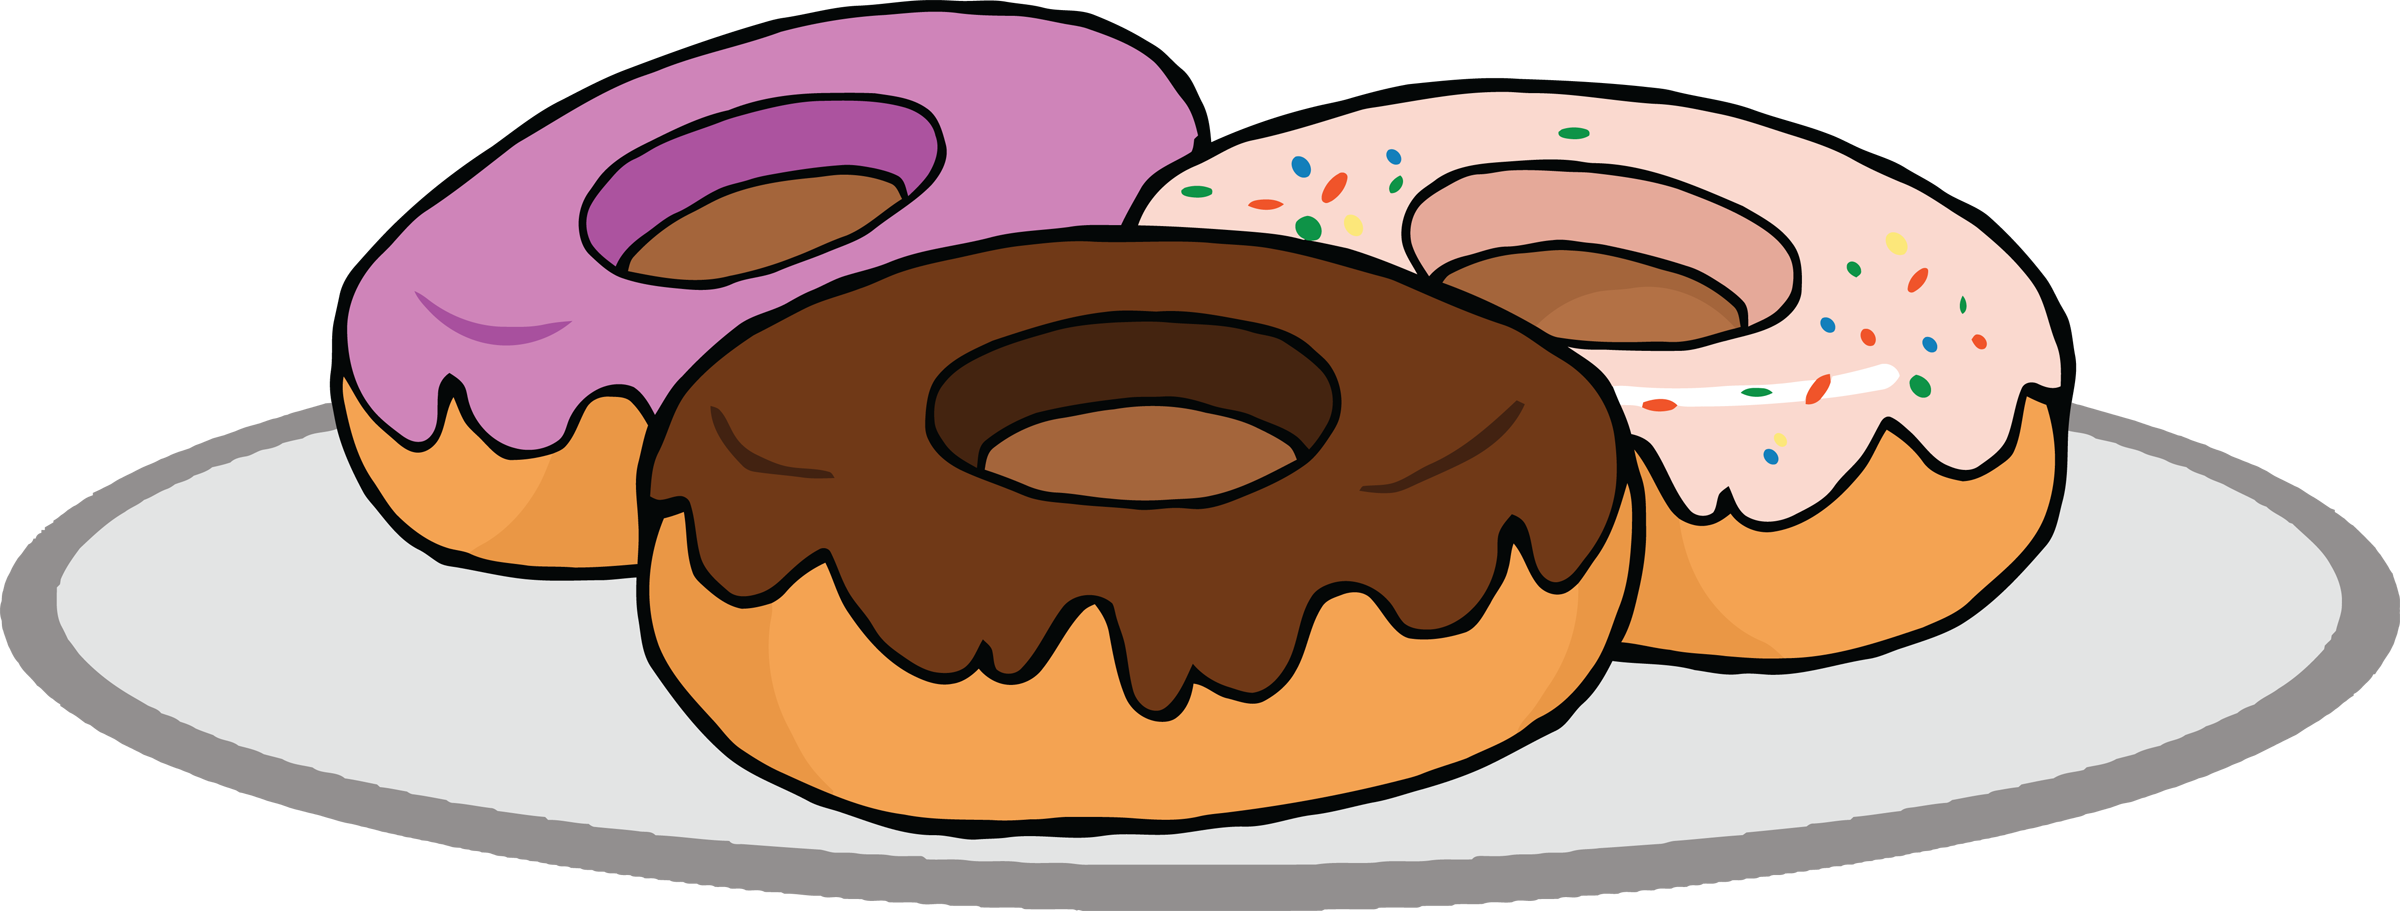 Cartoon donut clipart clipart kid 2